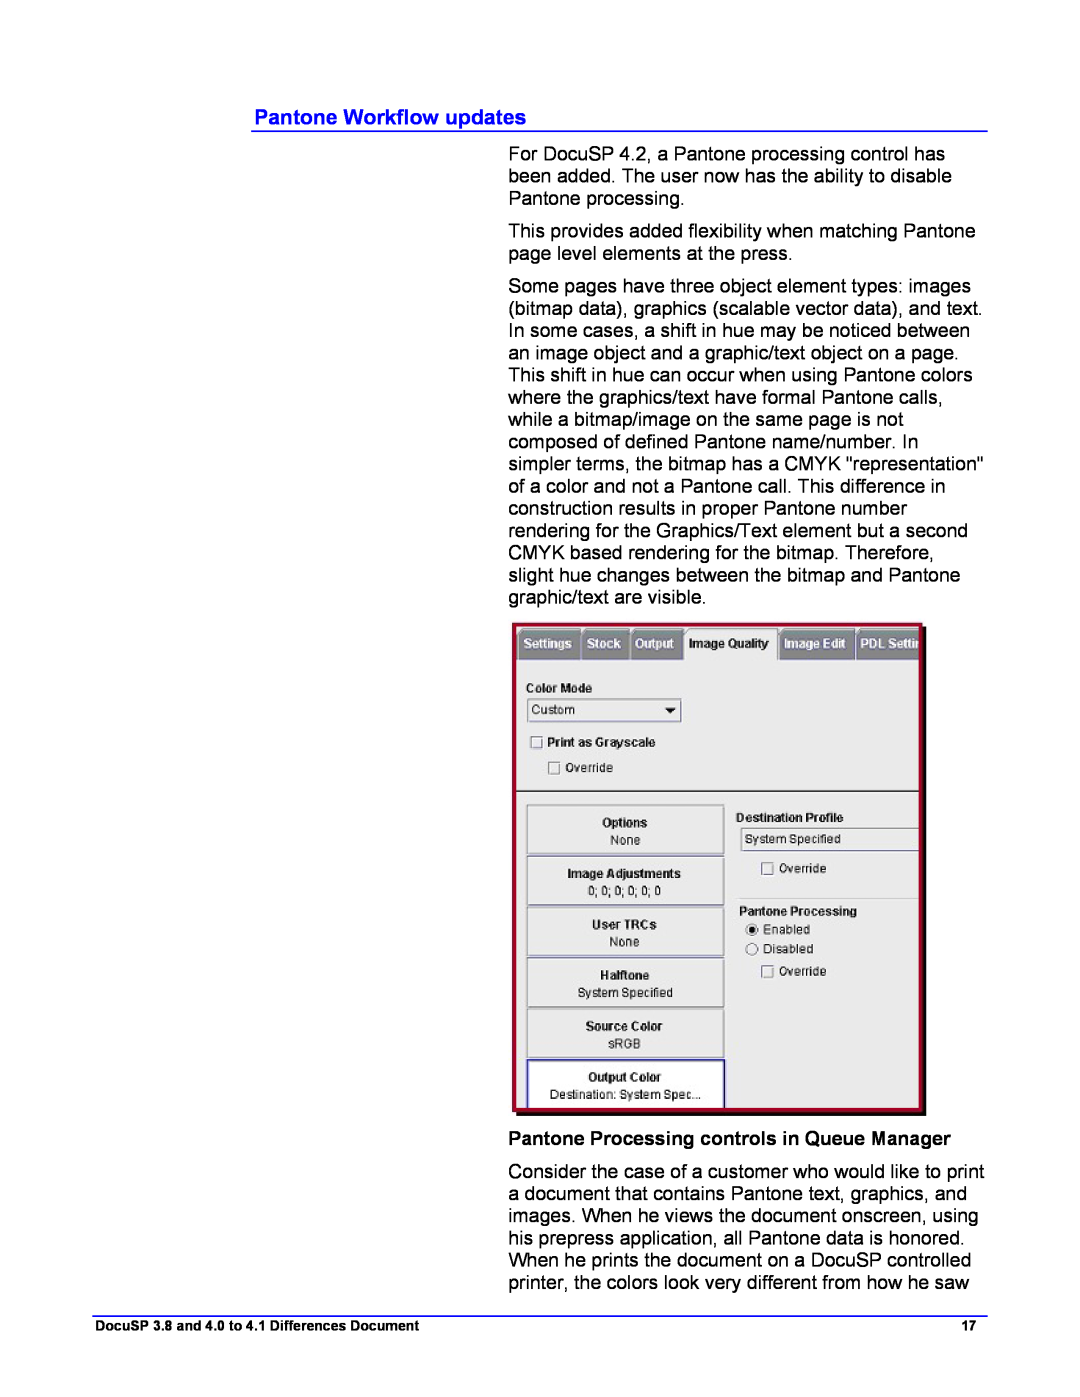 Xerox 4.1, 4.2 manual Pantone Workflow updates, Pantone Processing controls in Queue Manager 